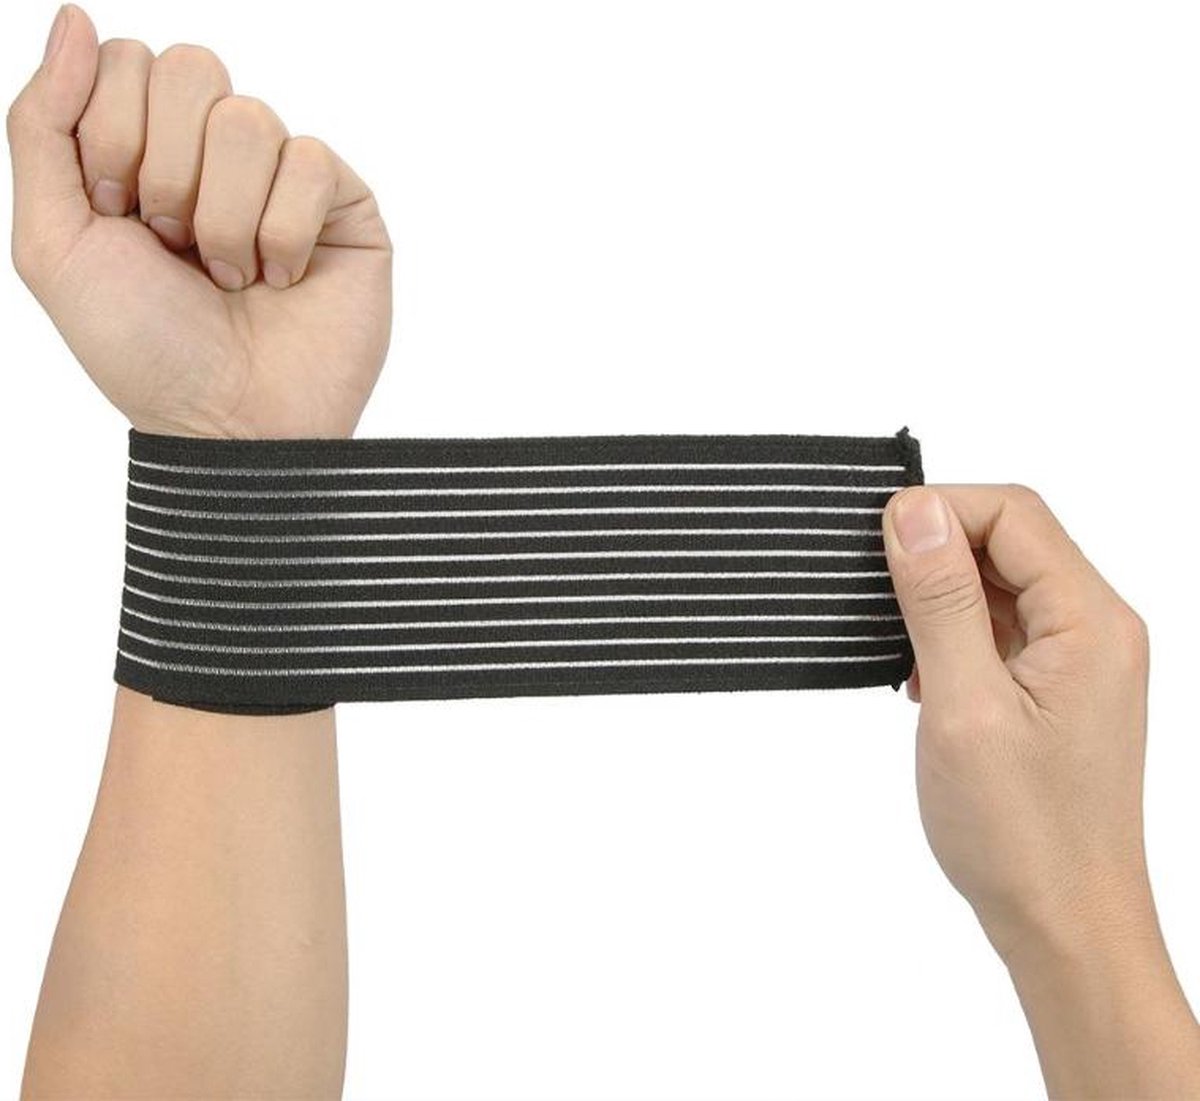 3BMT Polsbandage voor Steun - Compressie bandage - 41 x 7,5 cm - stretch